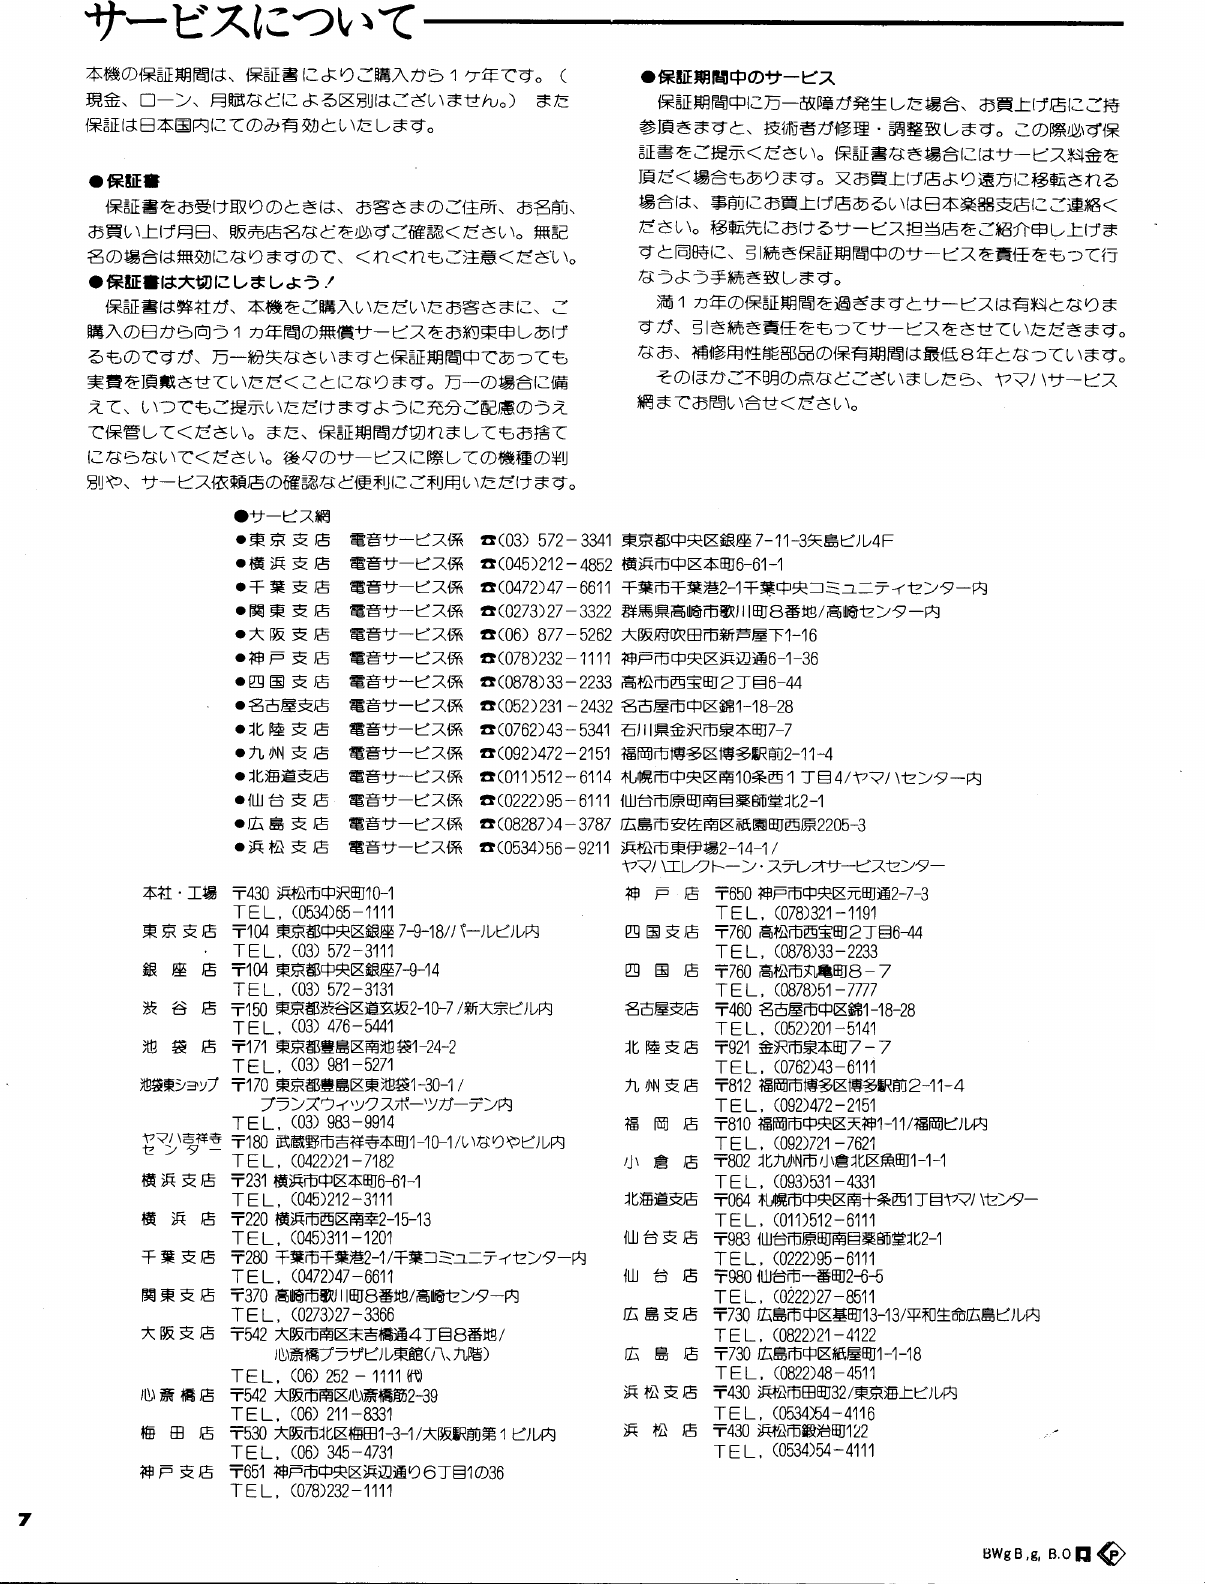 Page 8 of 8 - Yamaha  M508 M512 取扱説明書 M512J